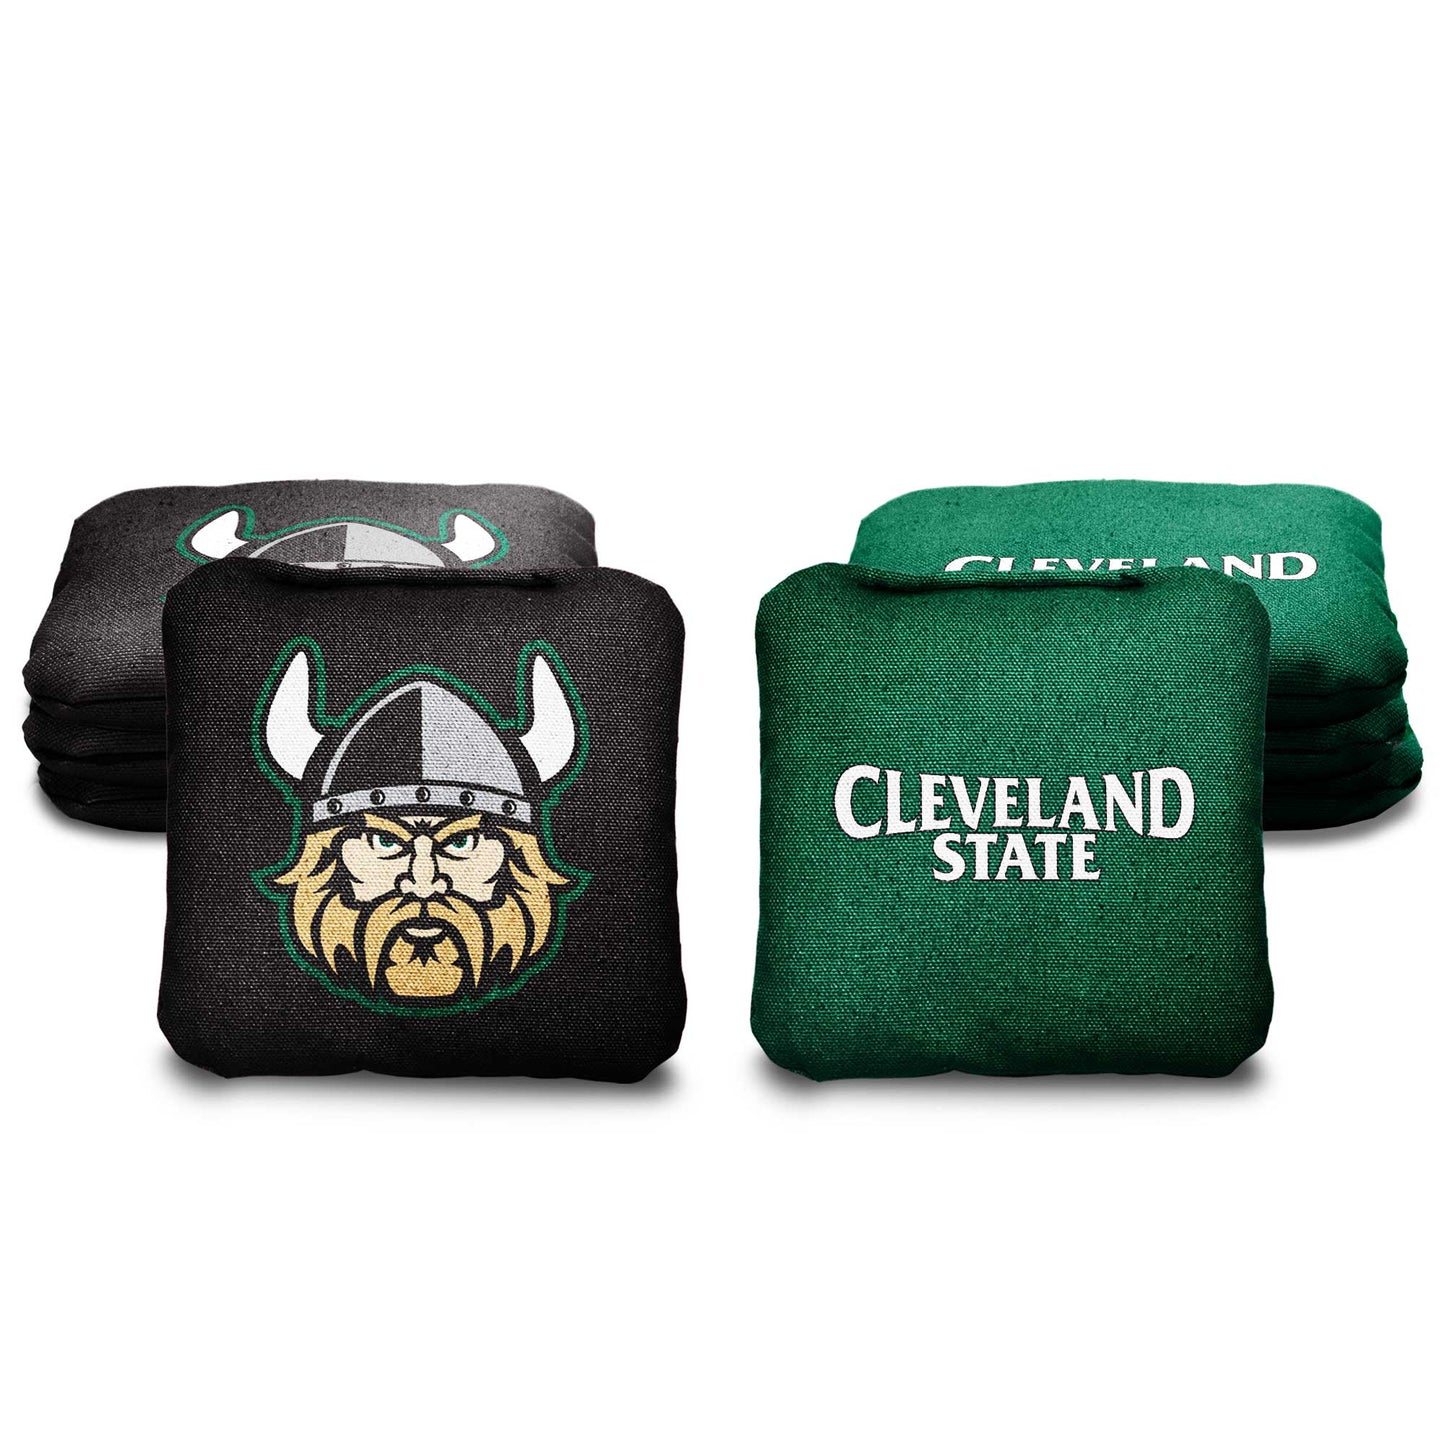 Cleveland State University Cornhole Bags - 8 Cornhole Bags